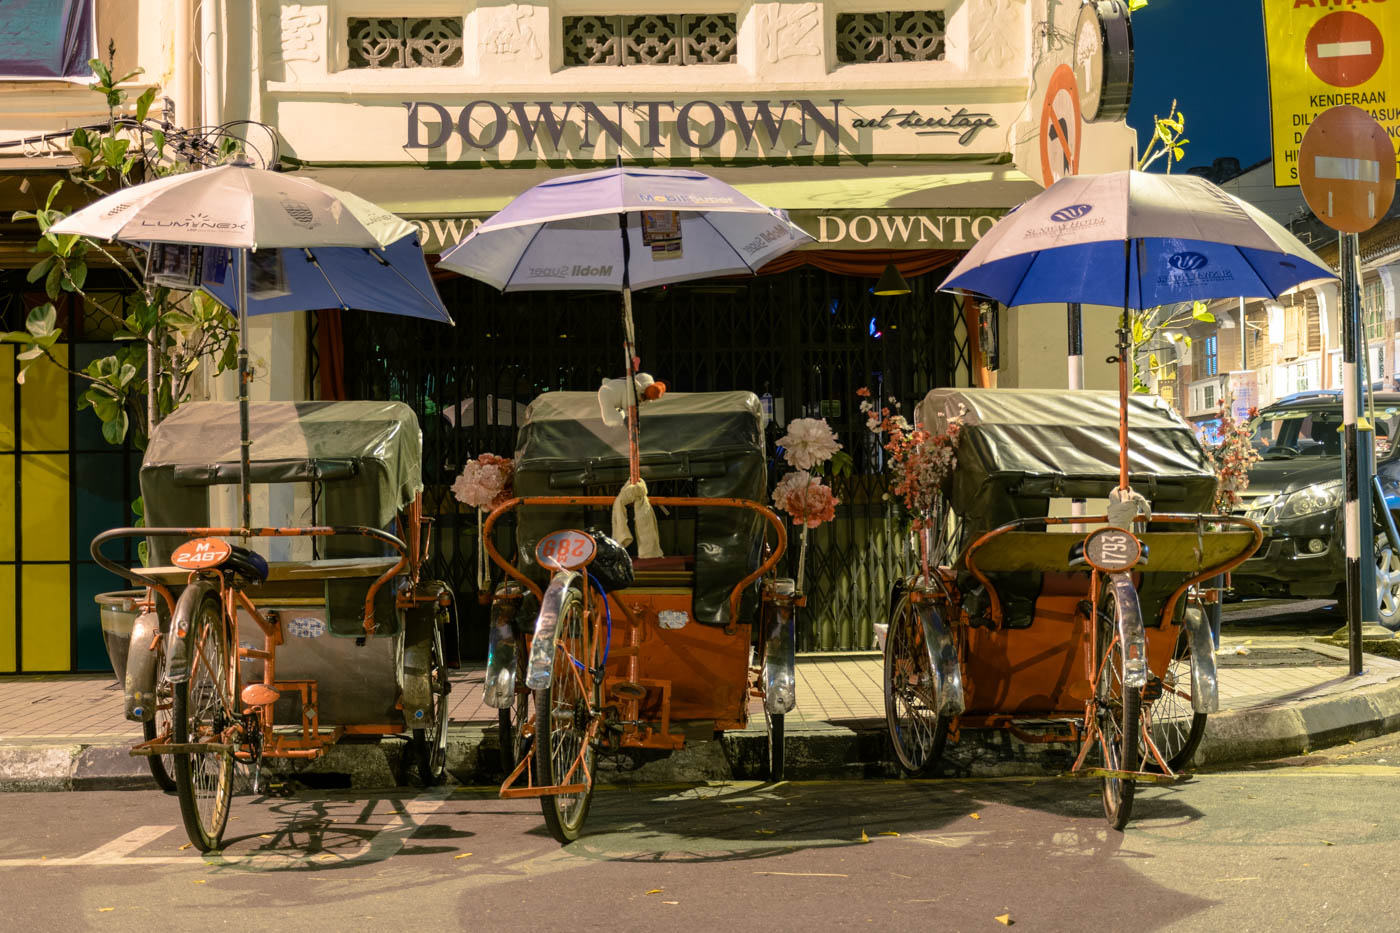 Three tuktuk bikes parked at night in the streets of Penang